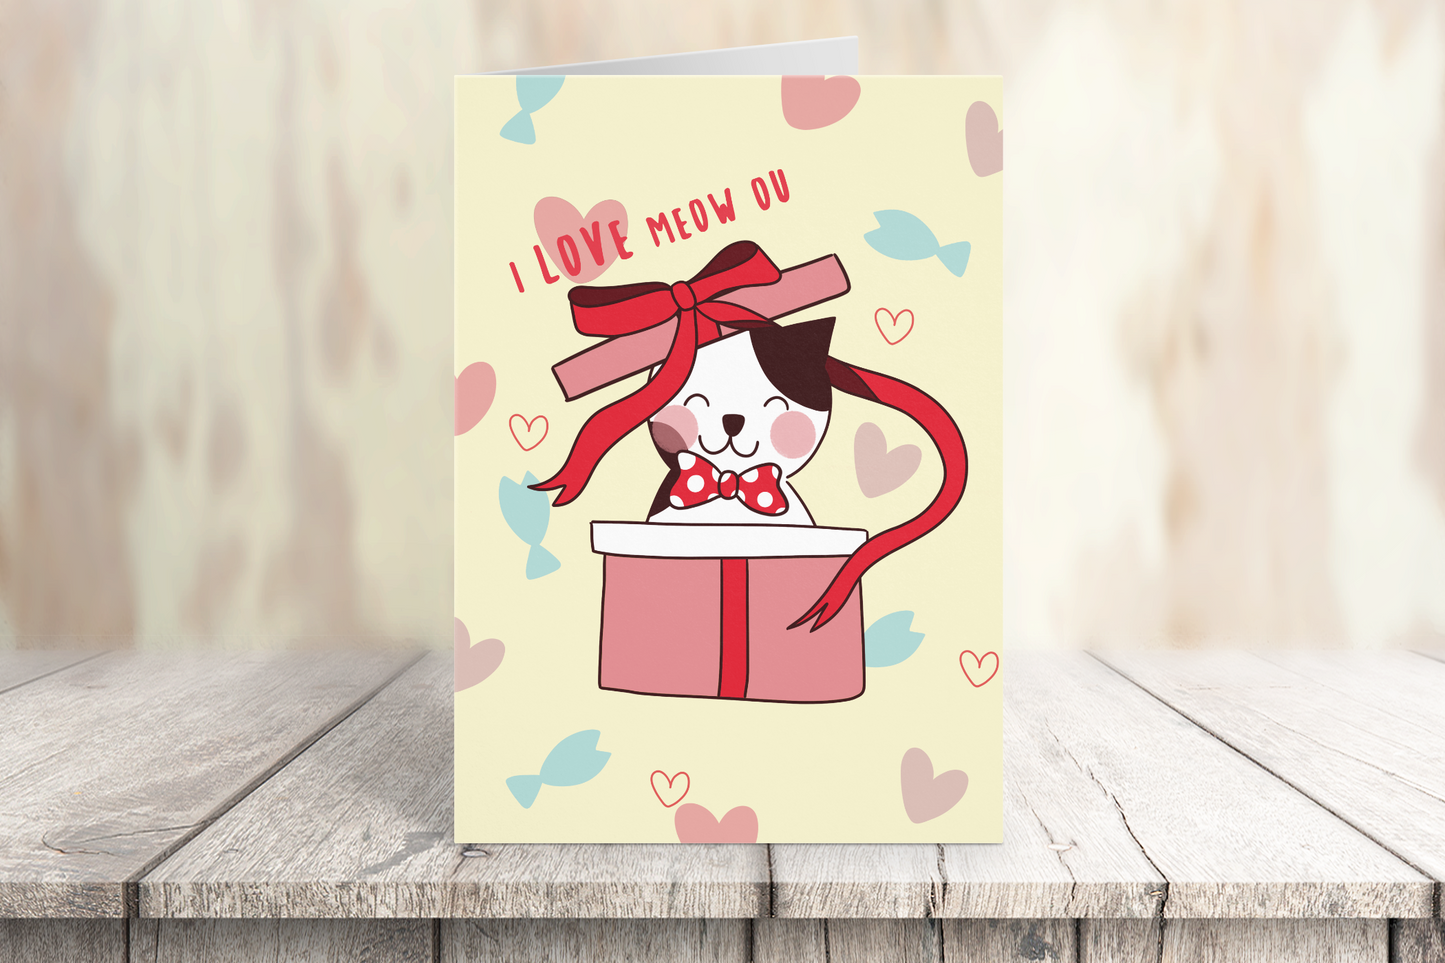 I Love Meow-ou Card